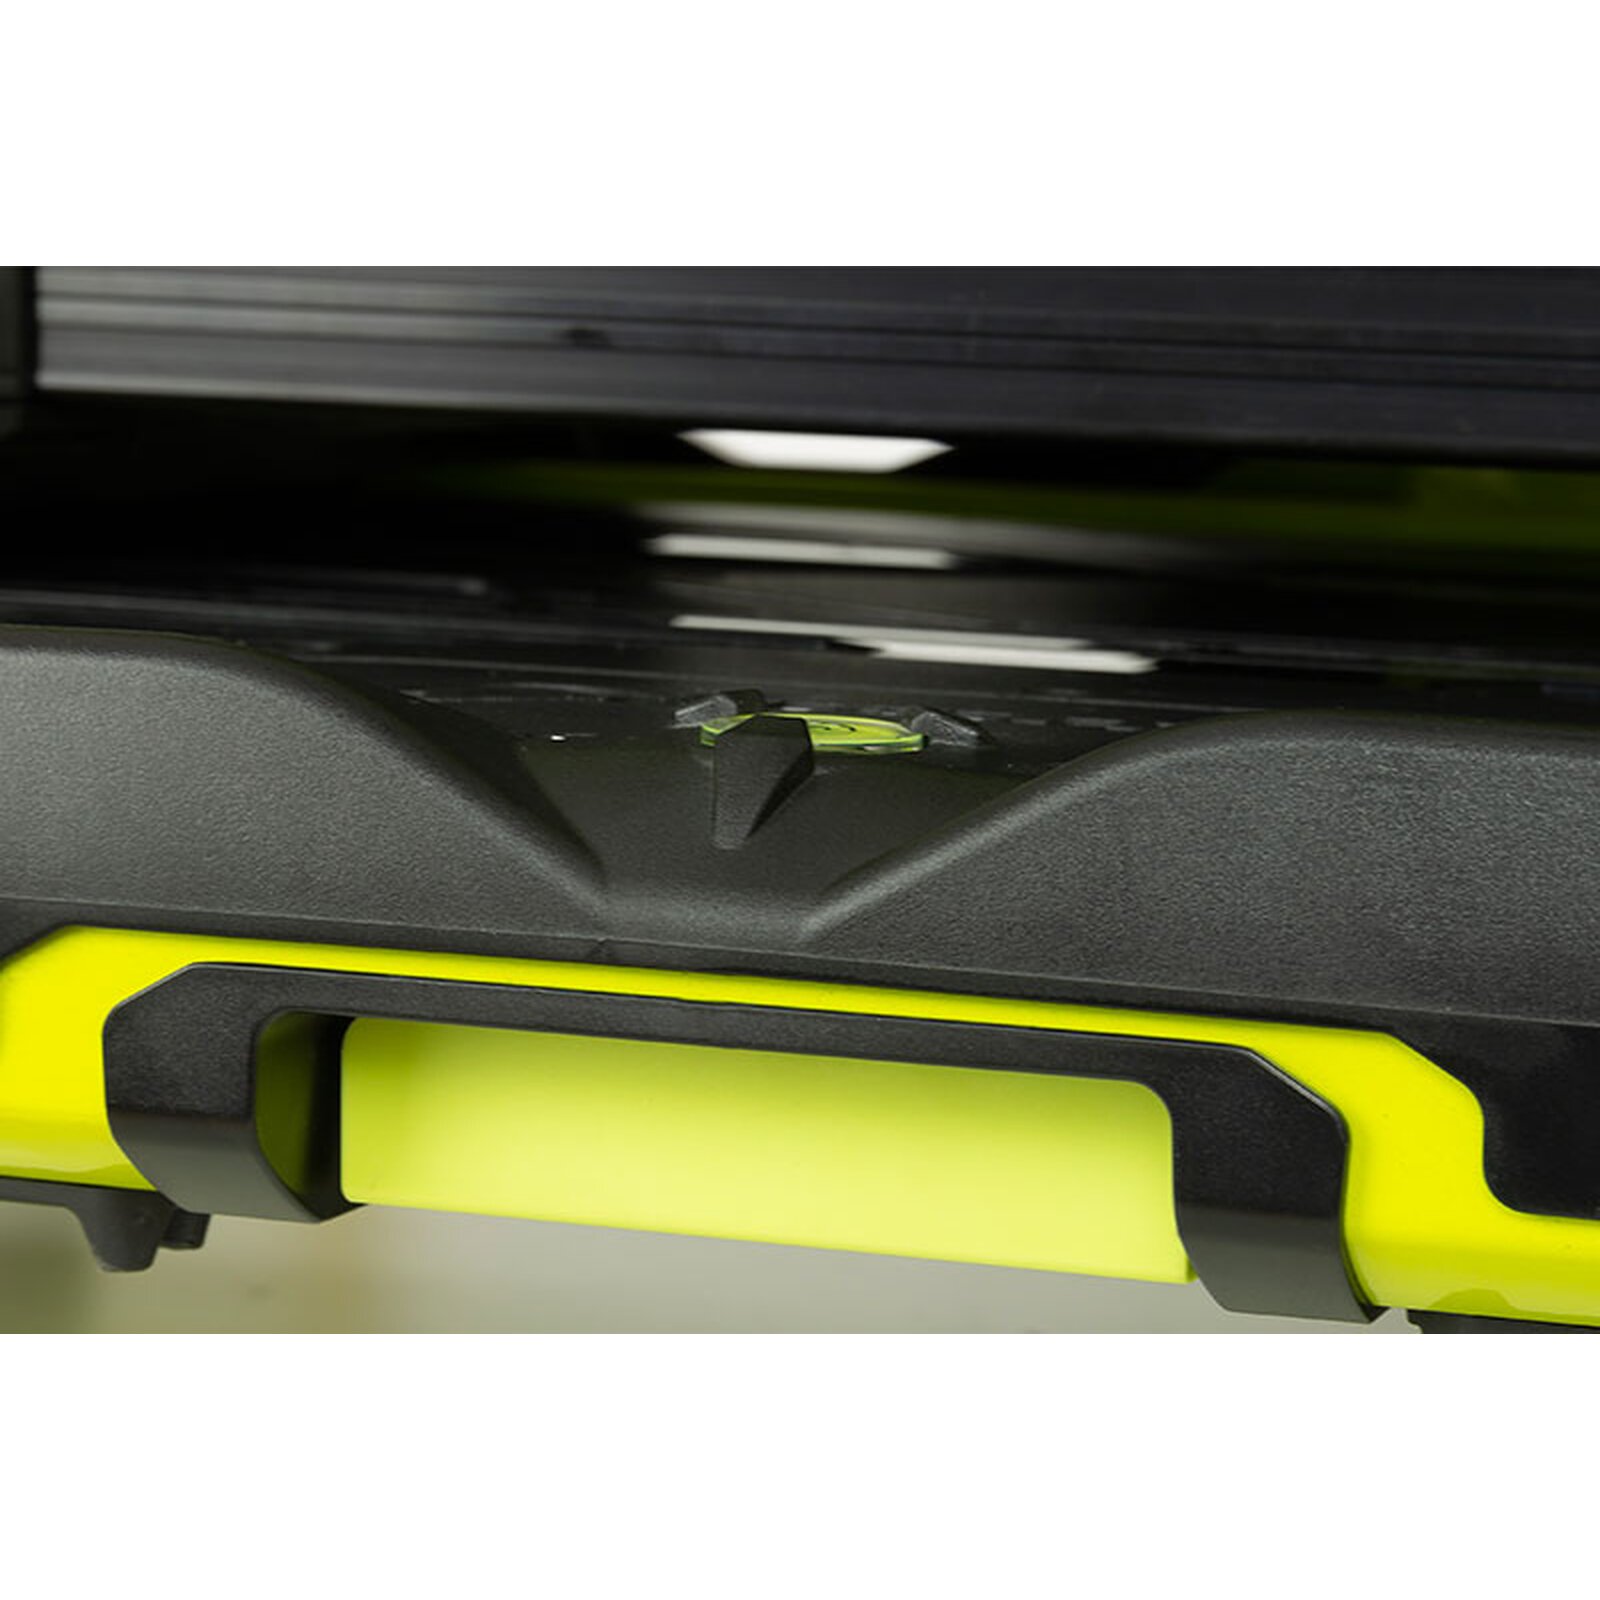 Matrix XR36 Pro Lime Seatbox ( inc 1x shallow trays & lid + deep drawer)